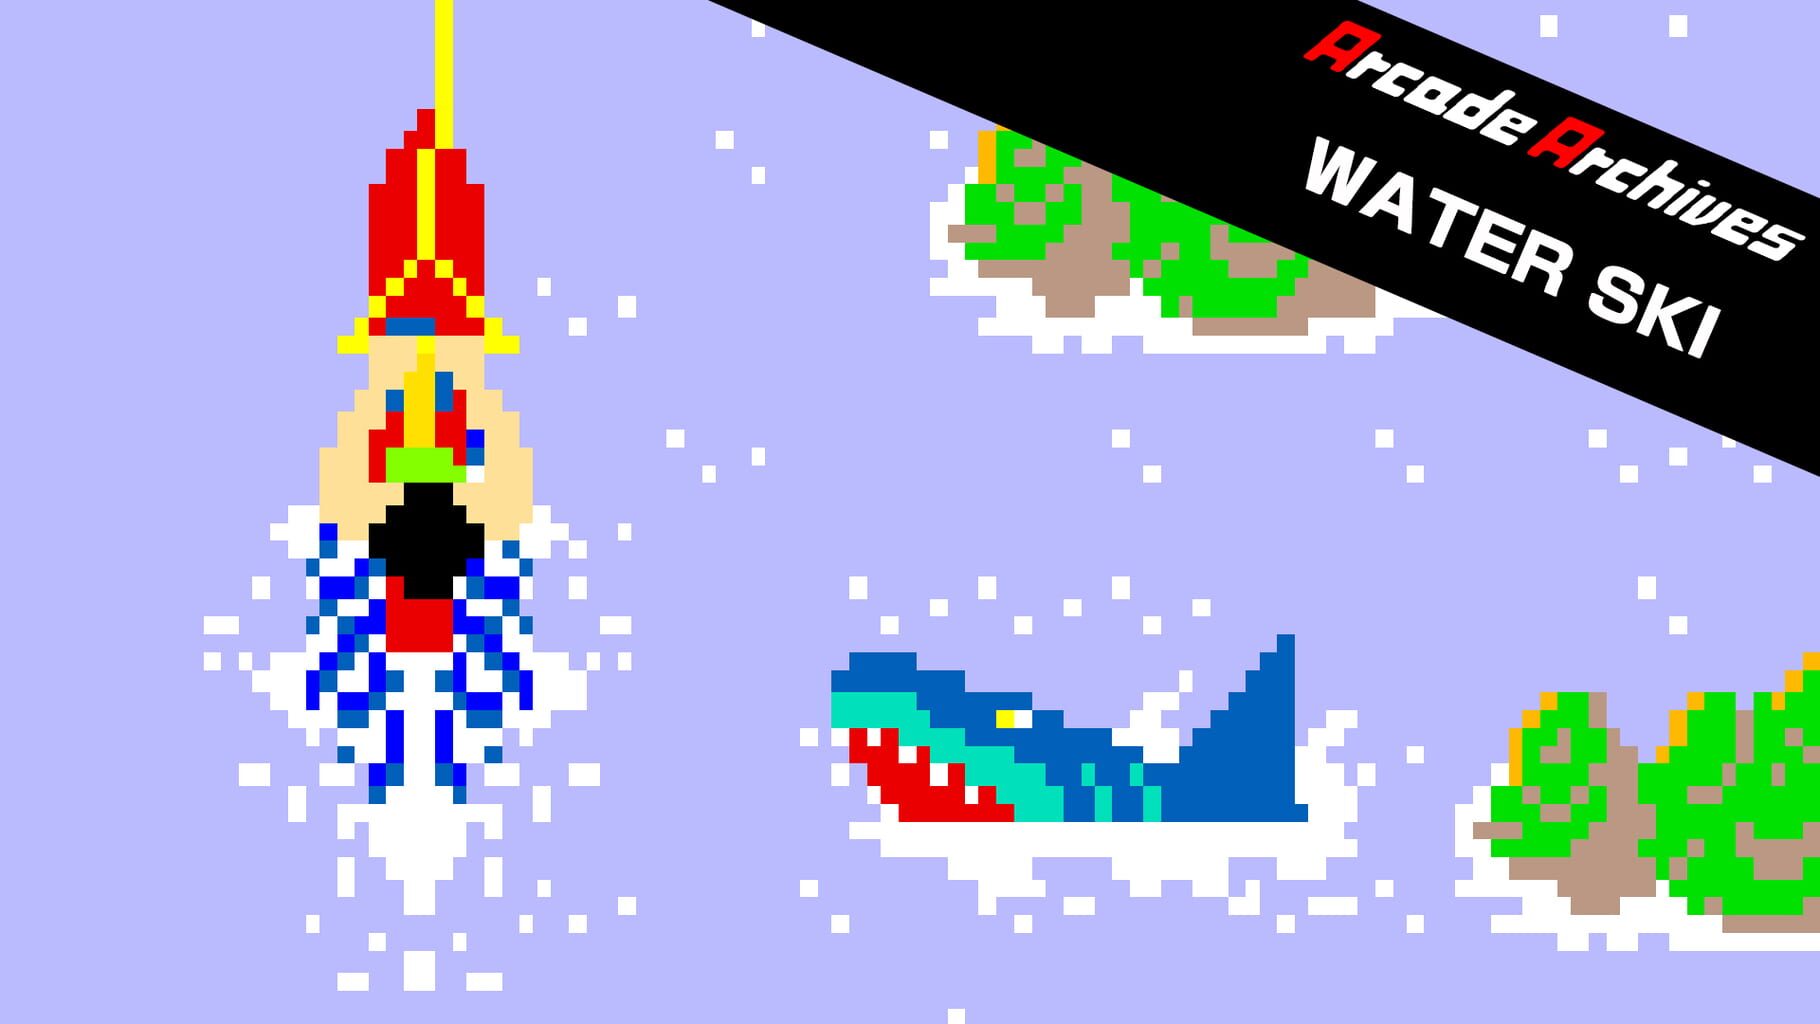 Arcade Archives: Water Ski artwork